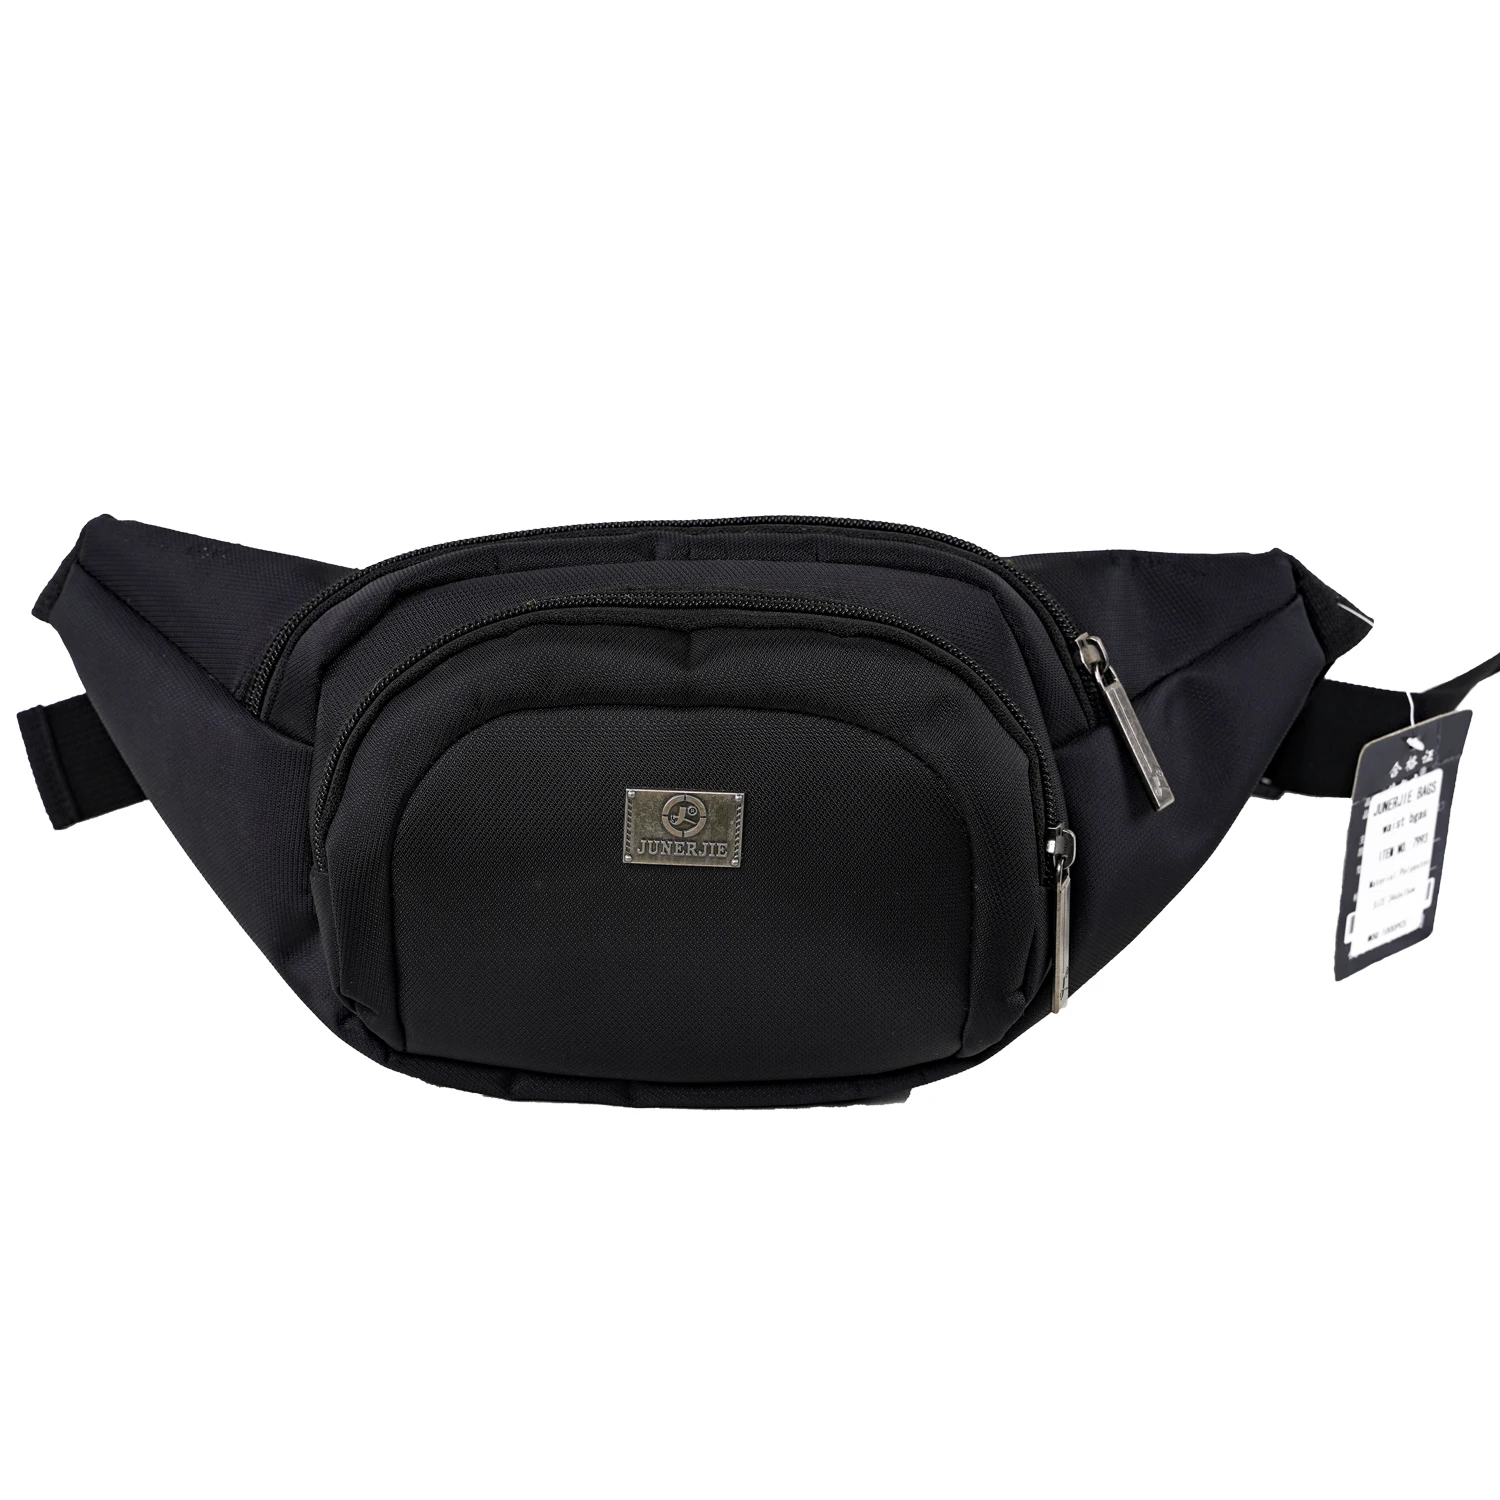 Outdoor running black fanny pack luxury waist belt bag